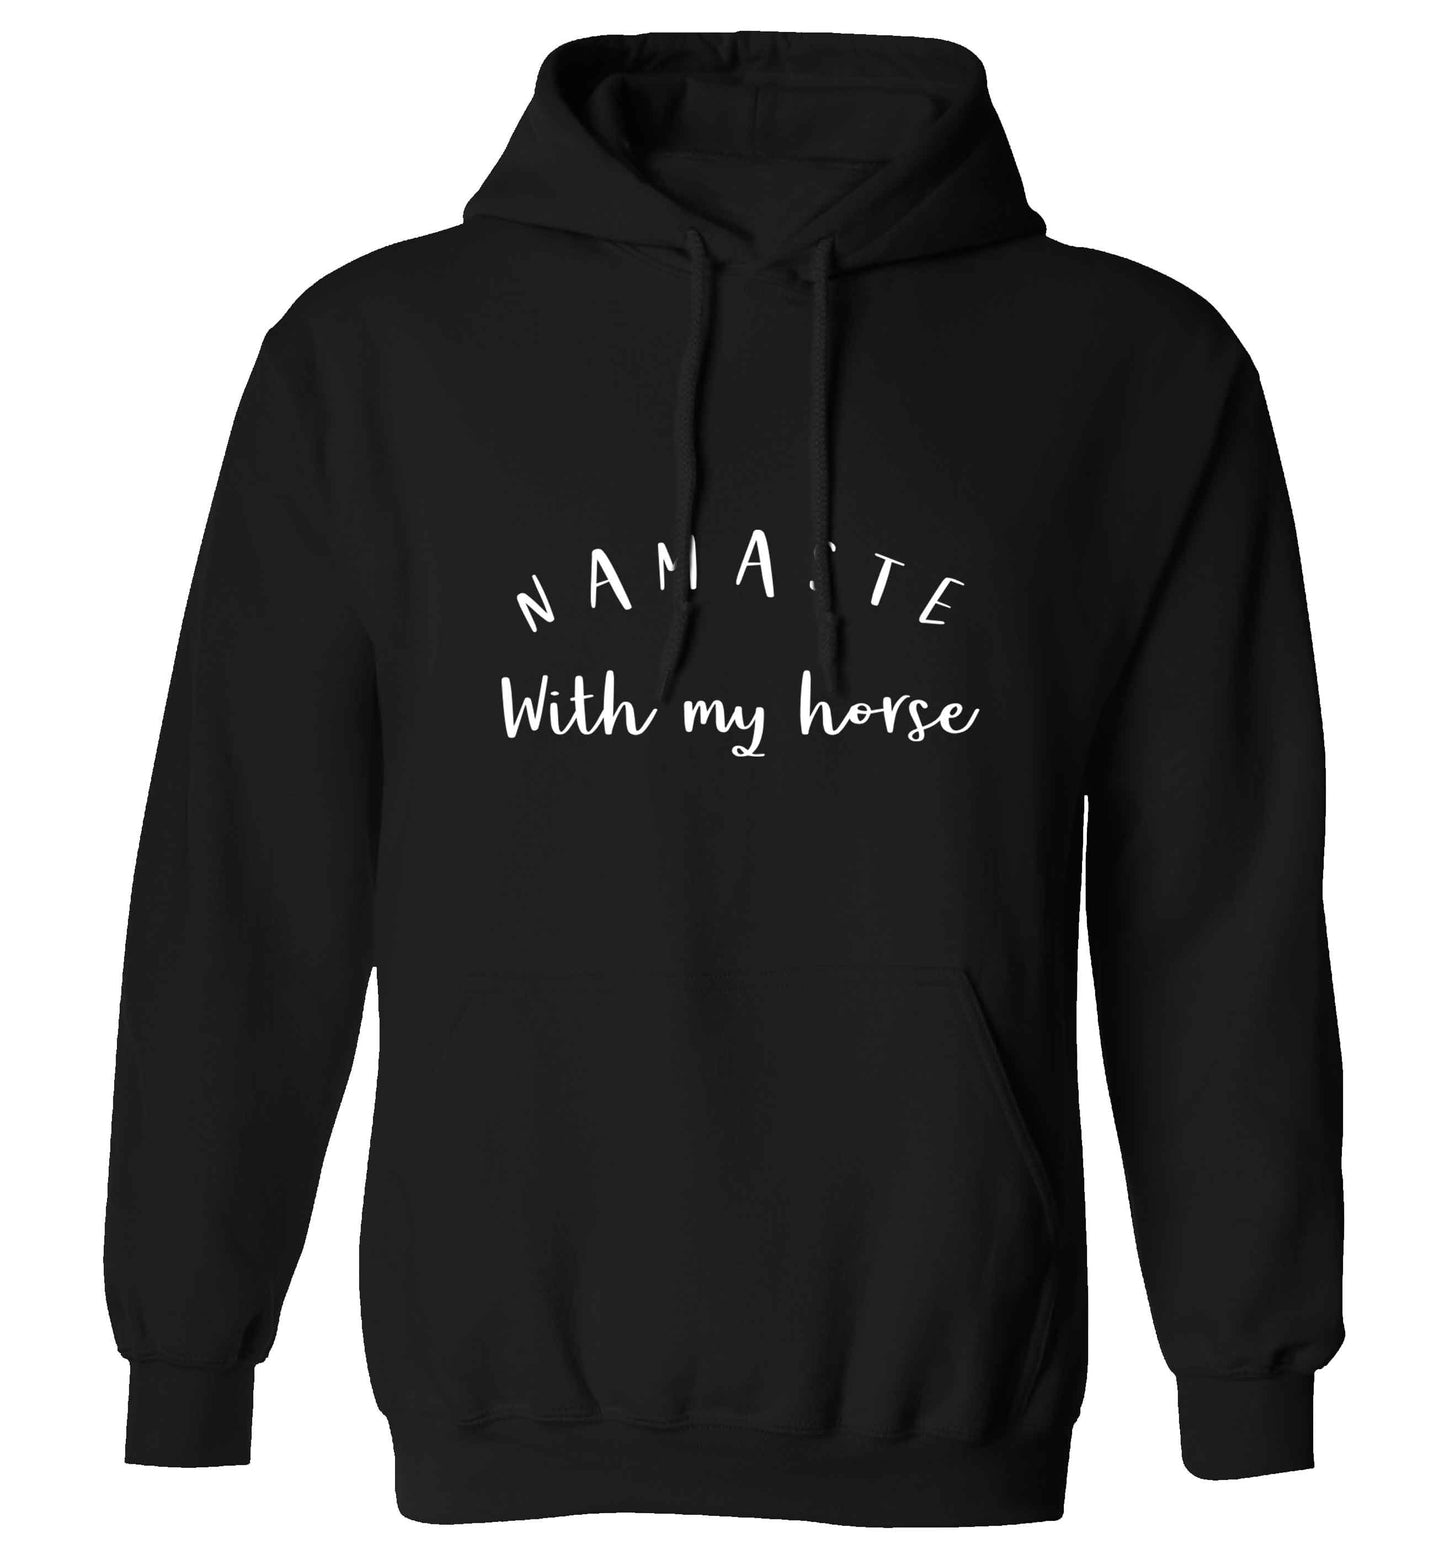 Namaste with my horse adults unisex black hoodie 2XL